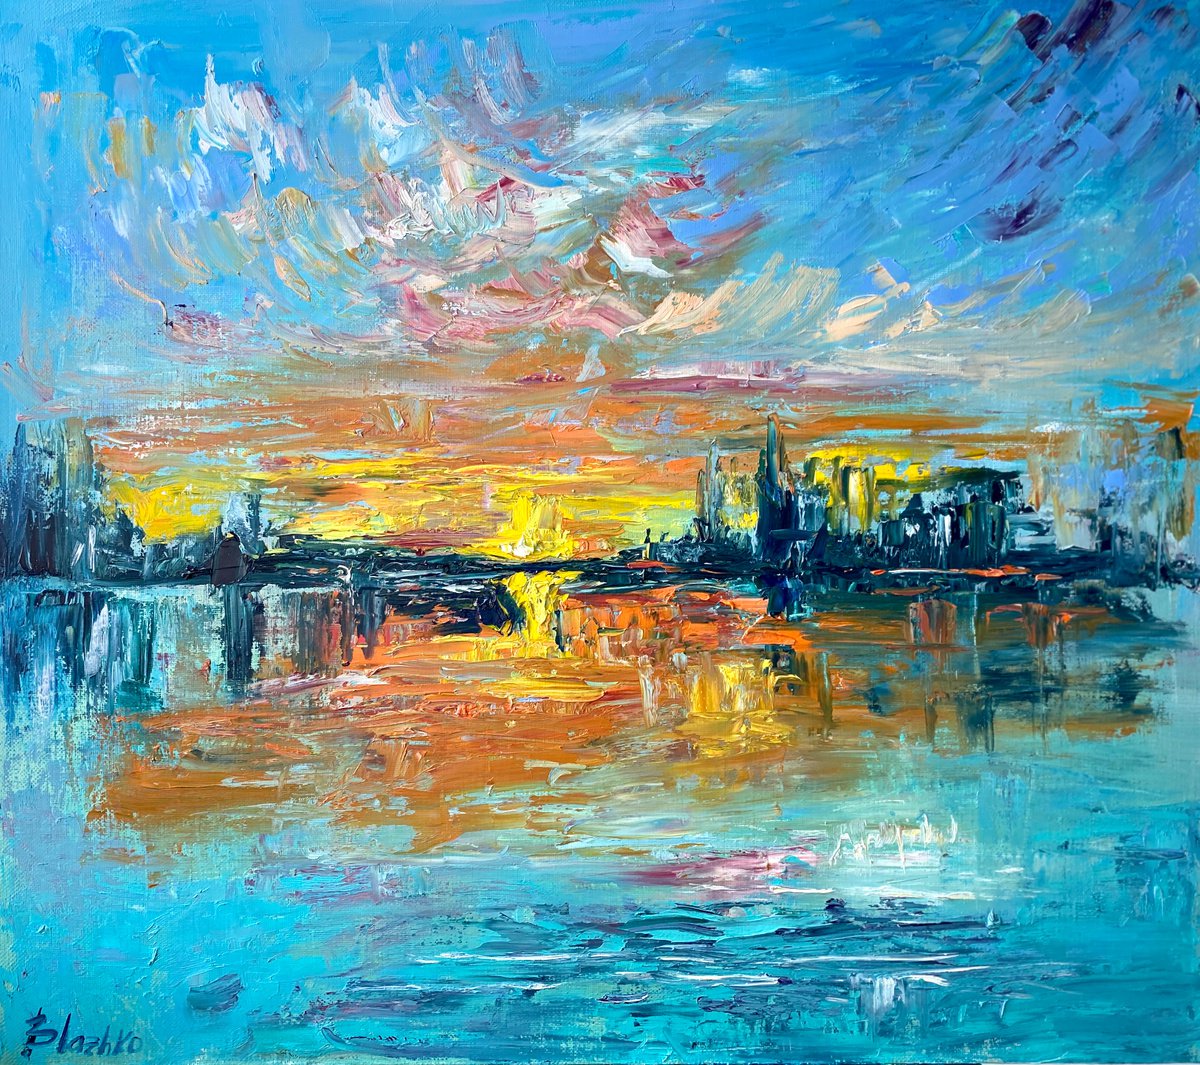 Sunset - Big city never sleeps, 70*80cm, impressionistic landscape oil painting in orange... by Olga Blazhko